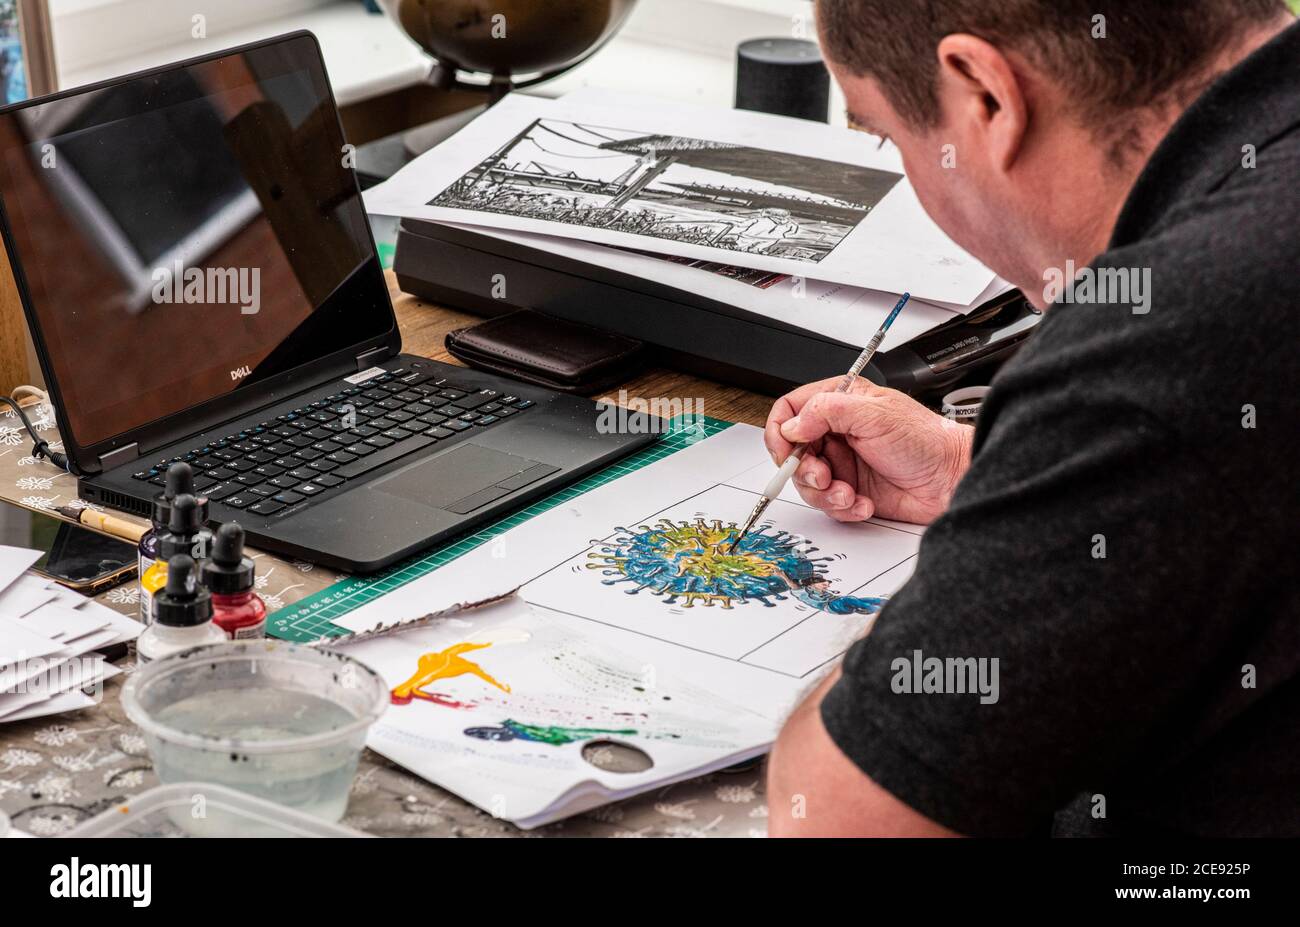 Artista de dibujos animados e ilustrador Graeme Bandeira trabajando en su estudio en casa. Foto de stock